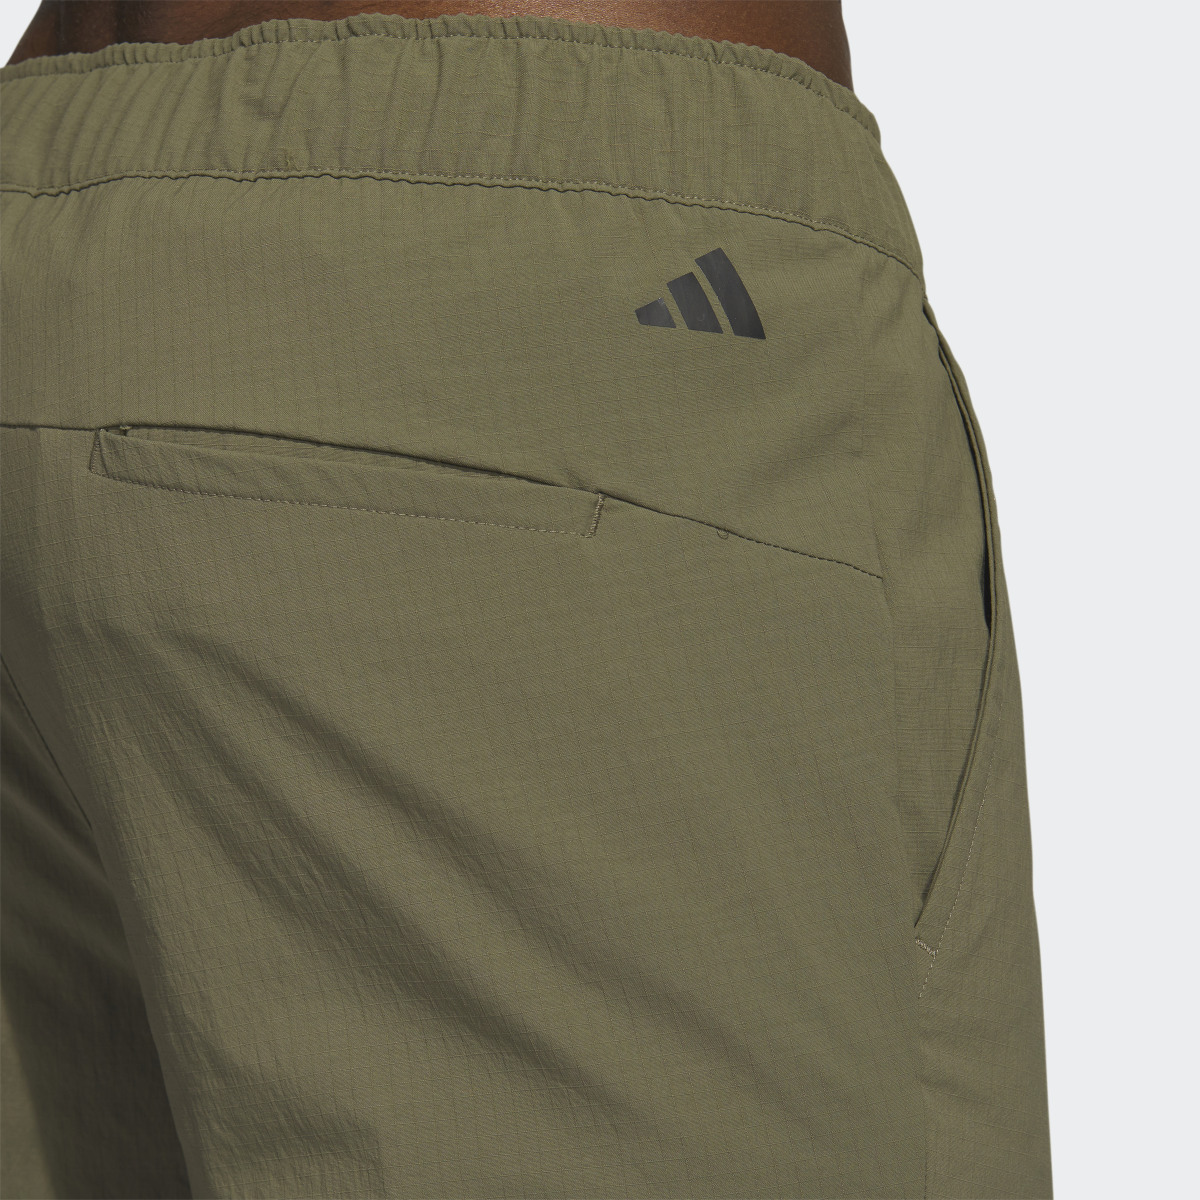 Adidas Golf Pants. 5